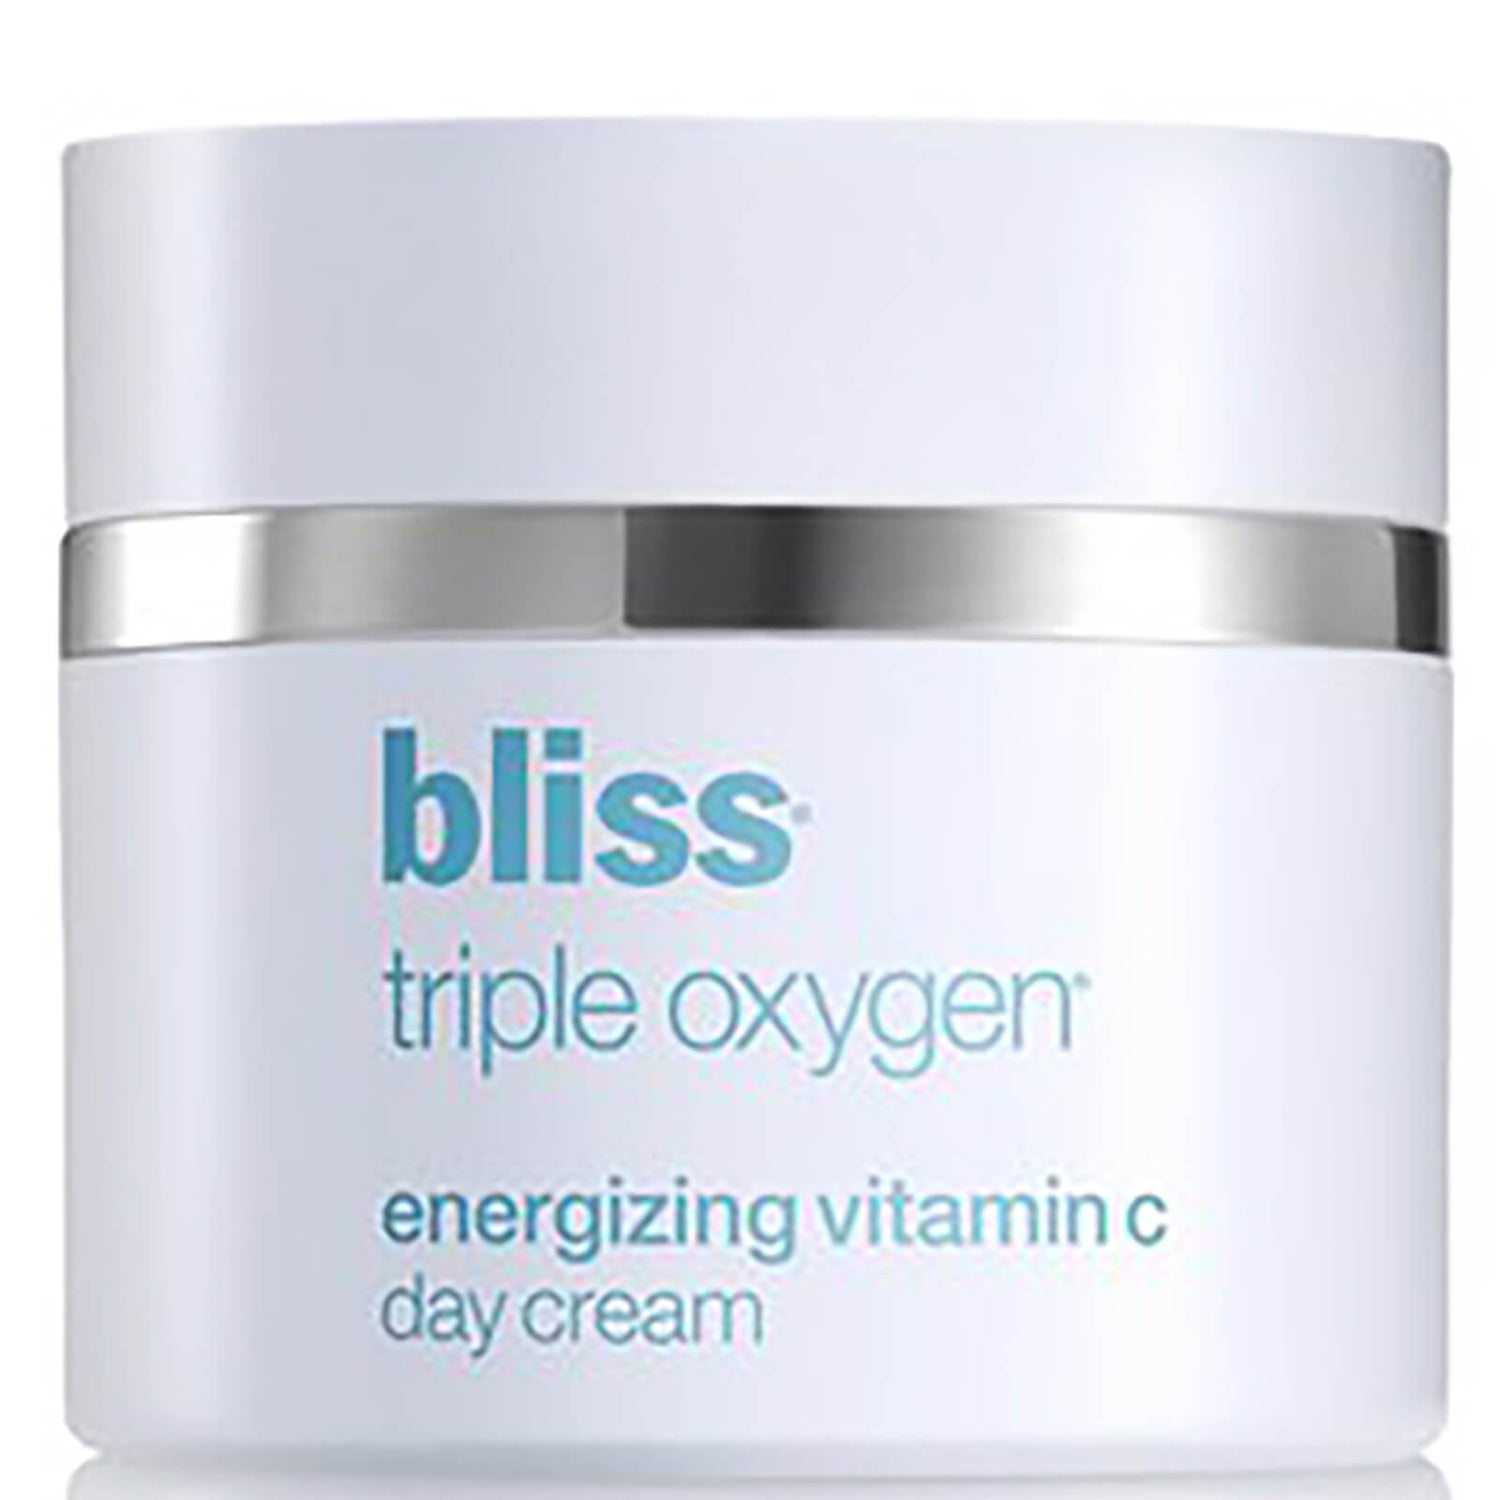 bliss Triple Oxygen Energizing Vitamin C Day Cream (50ml)